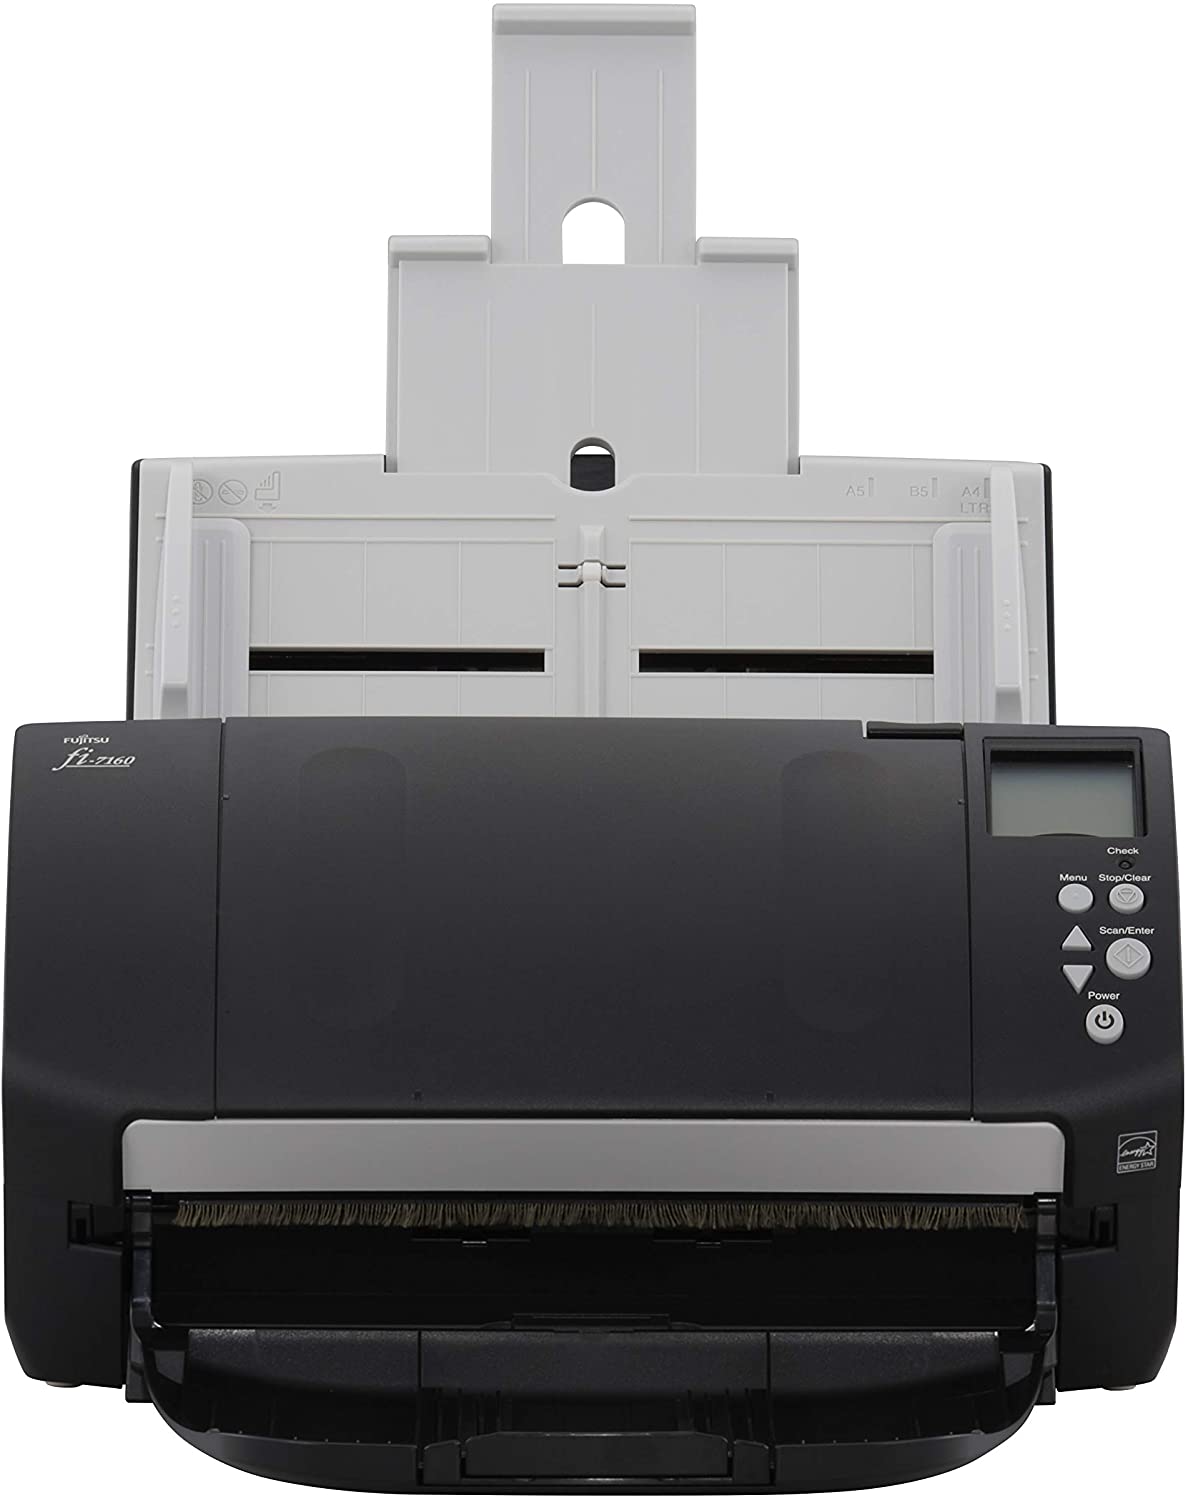 Fujitsu Scanners:  The Fujitsu fi-7160 Scanner